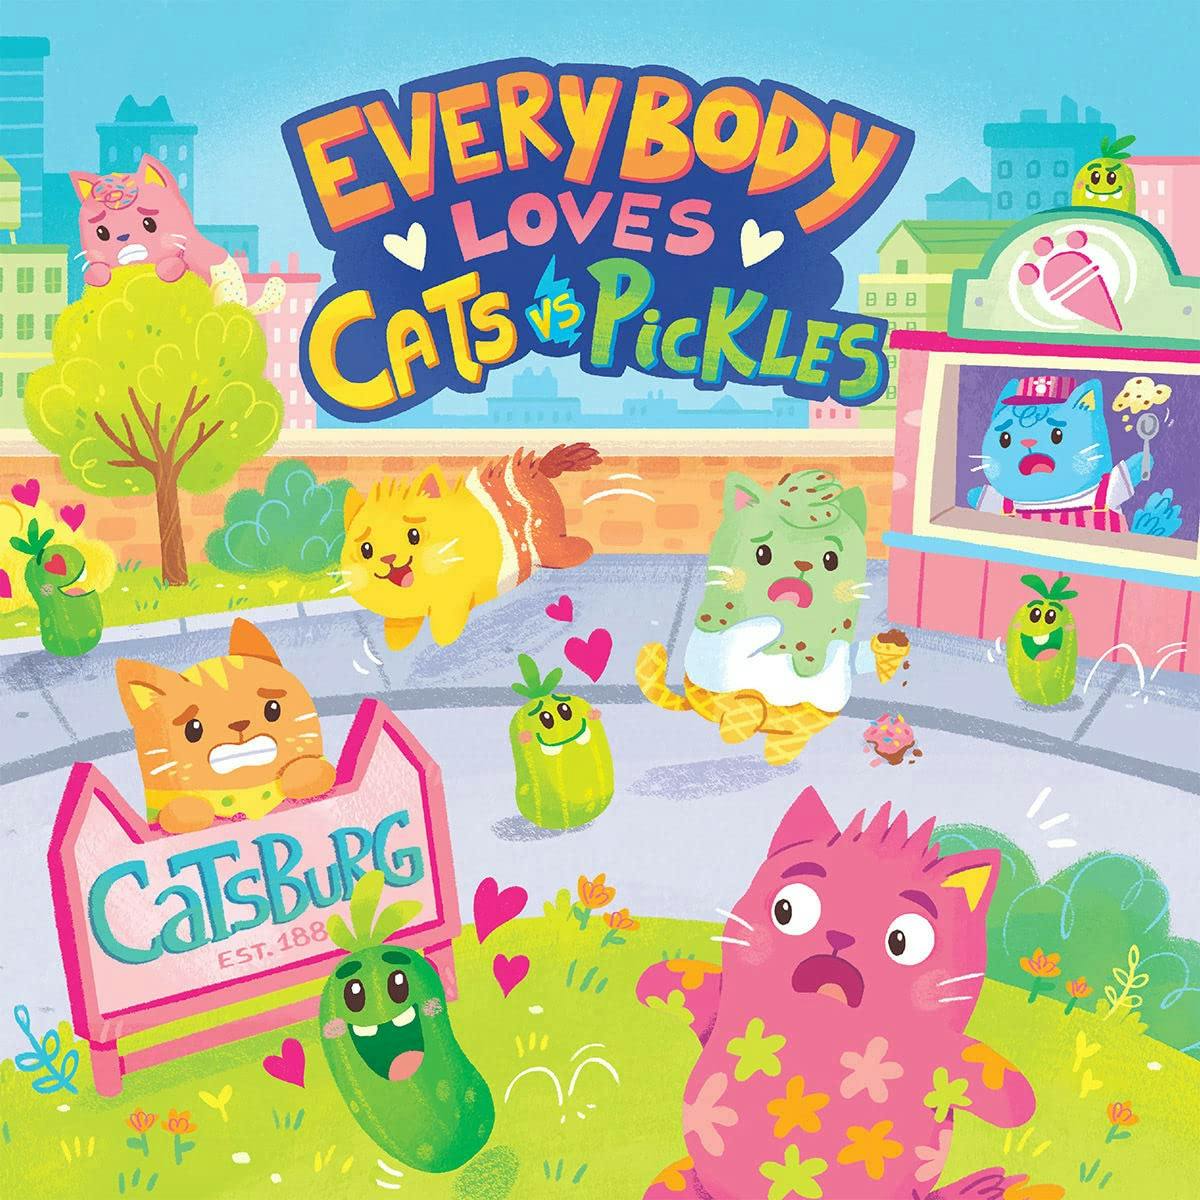 Everybody Loves Cats vs Pickles (hardcover)